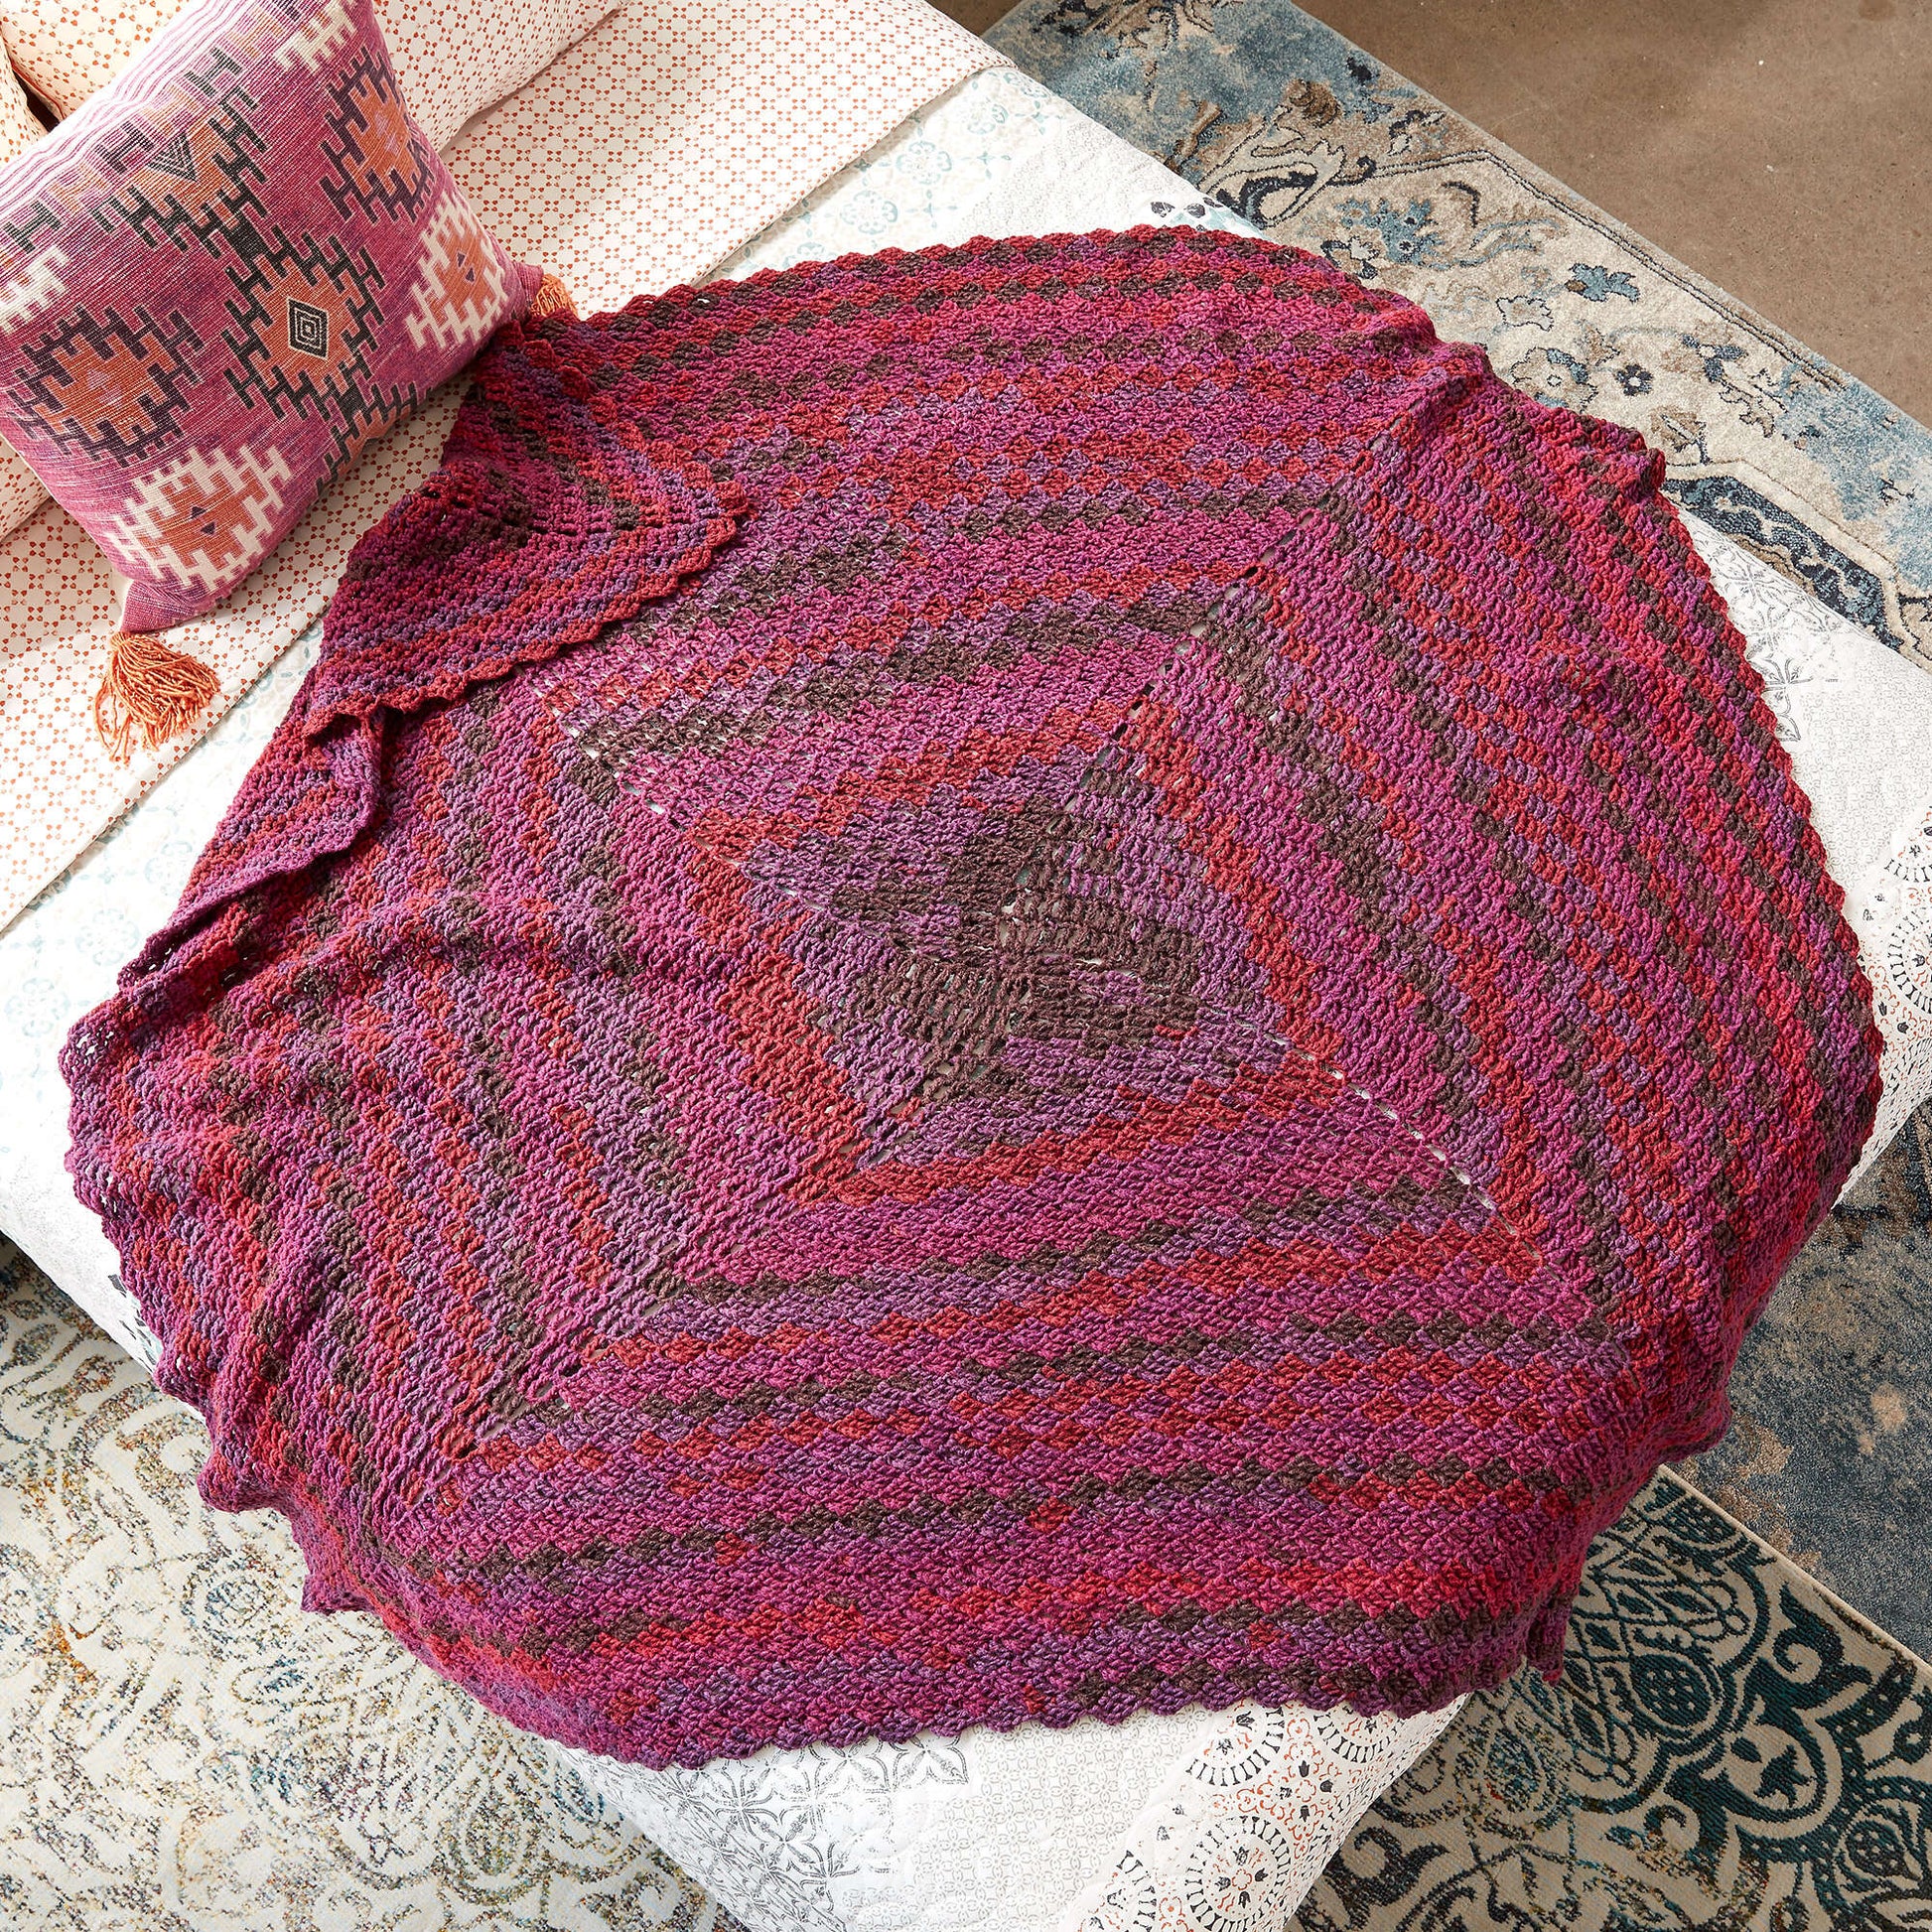 Caron Stacking Blocks Crochet Blanket Version 2